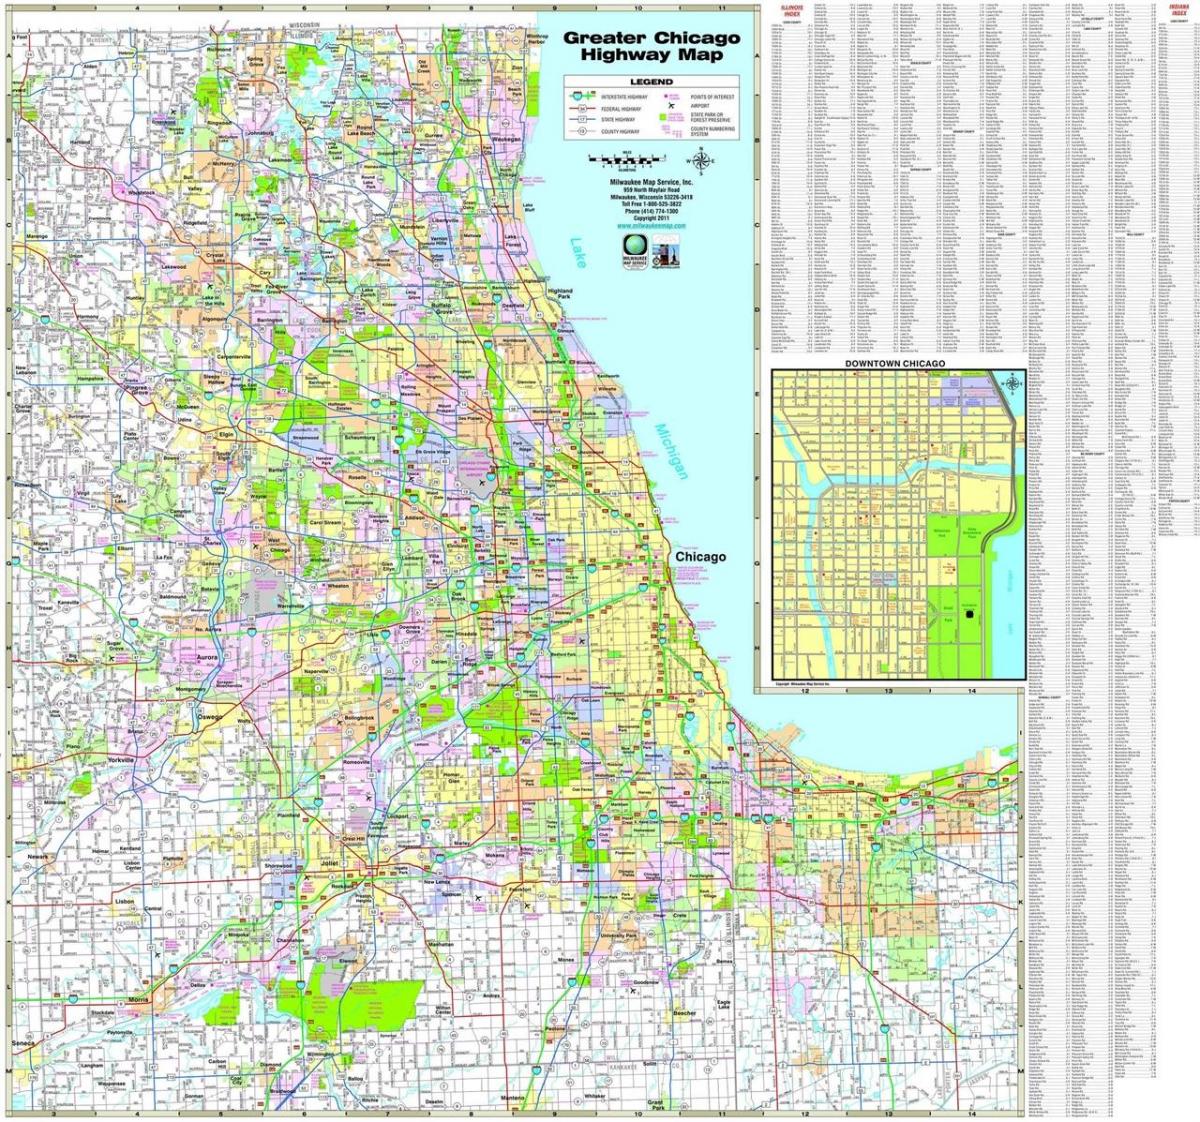 zemljevid Chicago avtocest